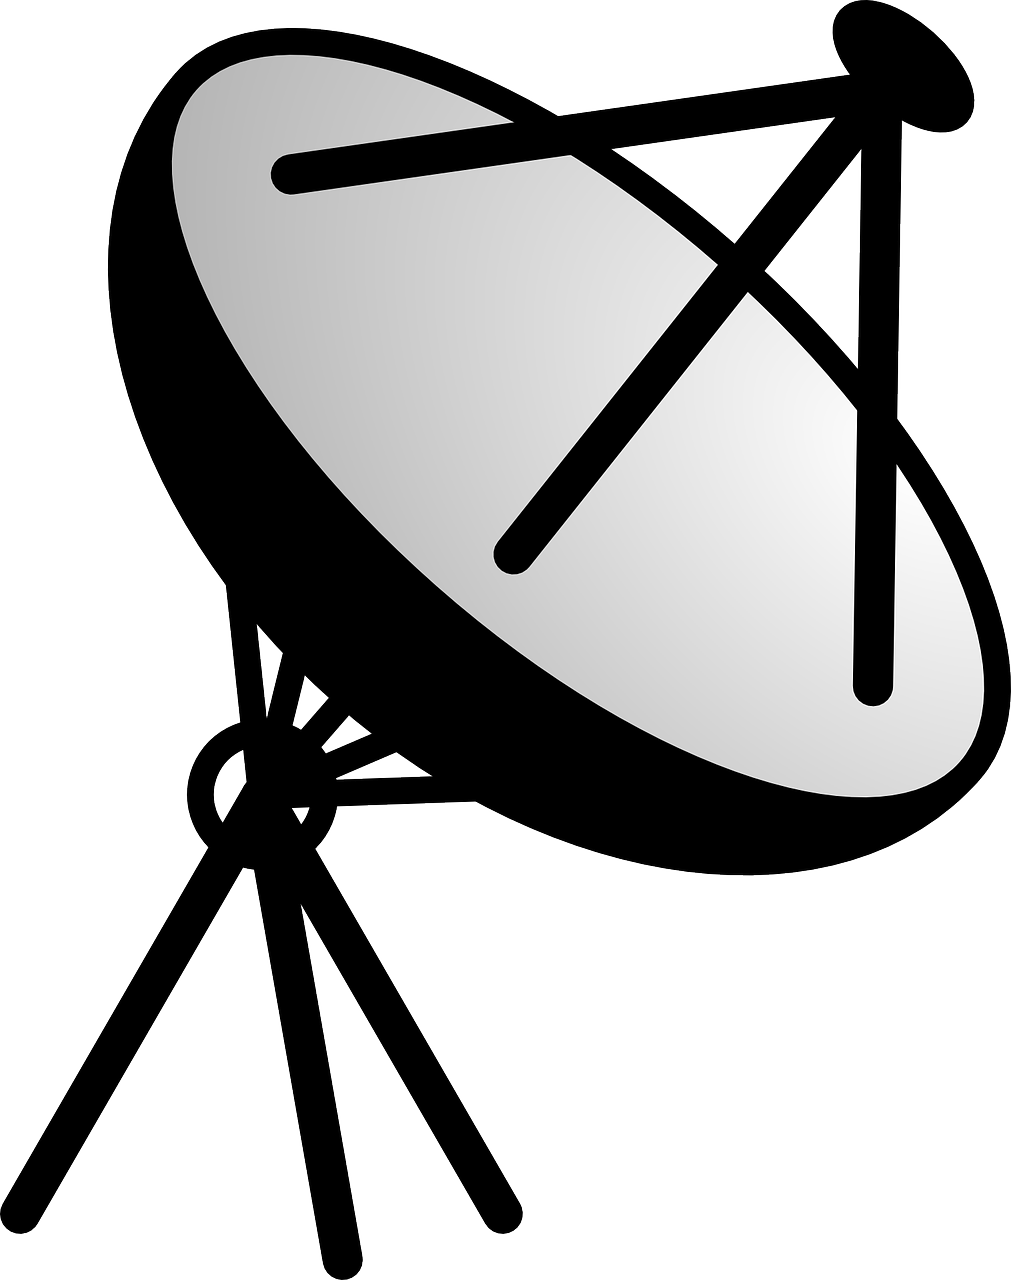 a satellite dish sitting on top of a tripod, a cartoon, by Konrad Krzyżanowski, pixabay, digital art, black and white television still, with a black background, mirroring, servers